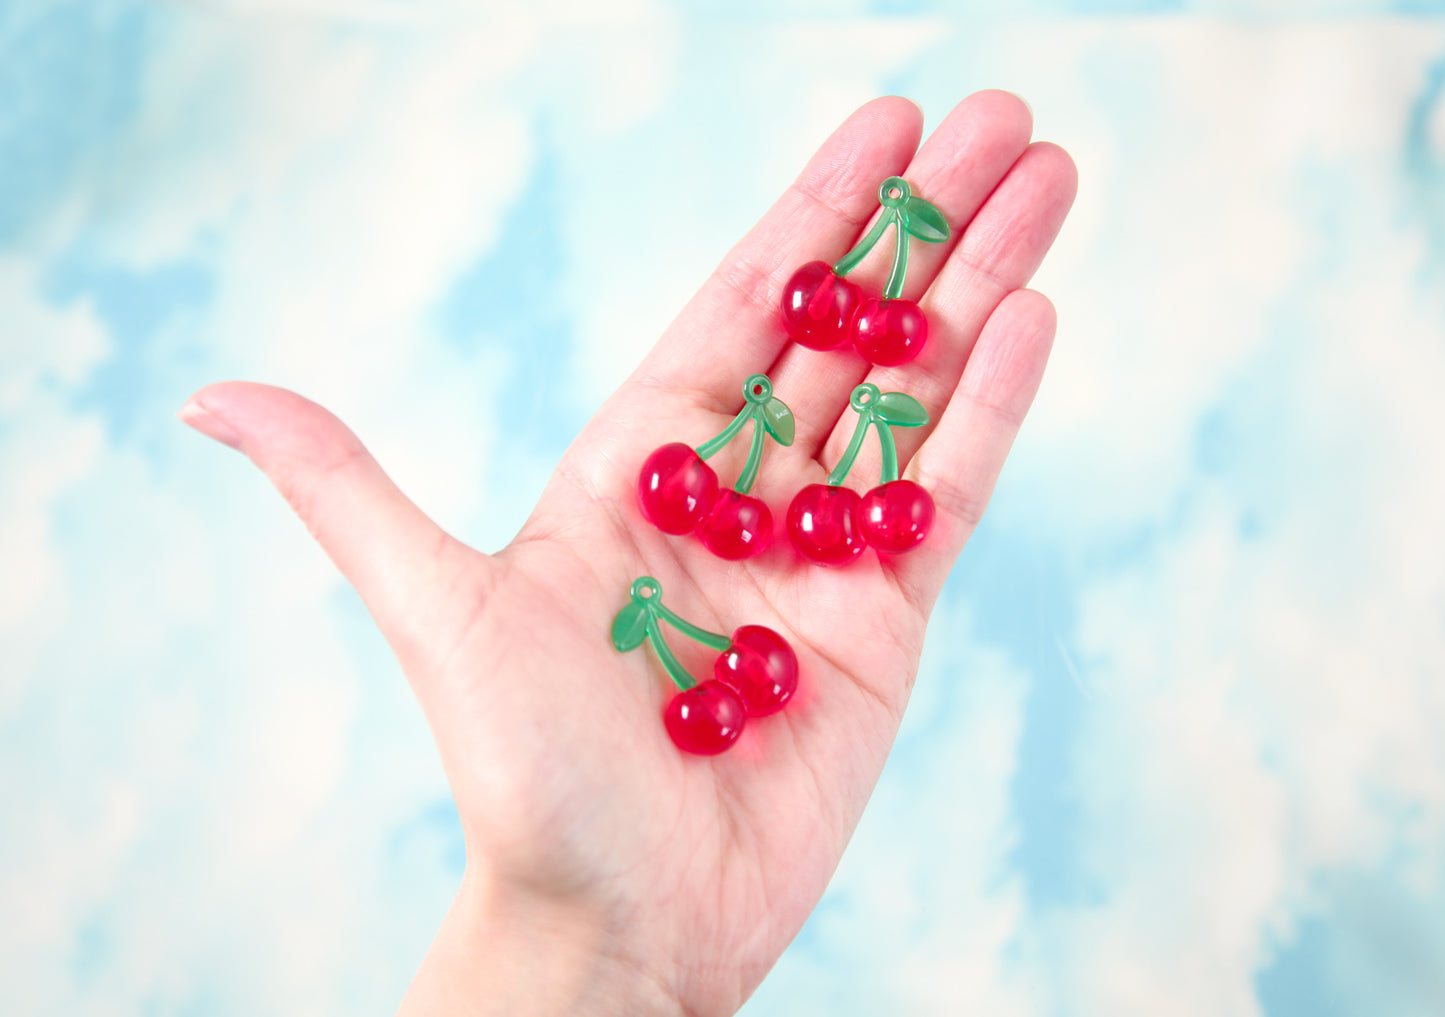 Cherry Charms - 32mm Cute Red Cherries Fake Fruit Charm Cherry Plastic Pendants – 6 pc set